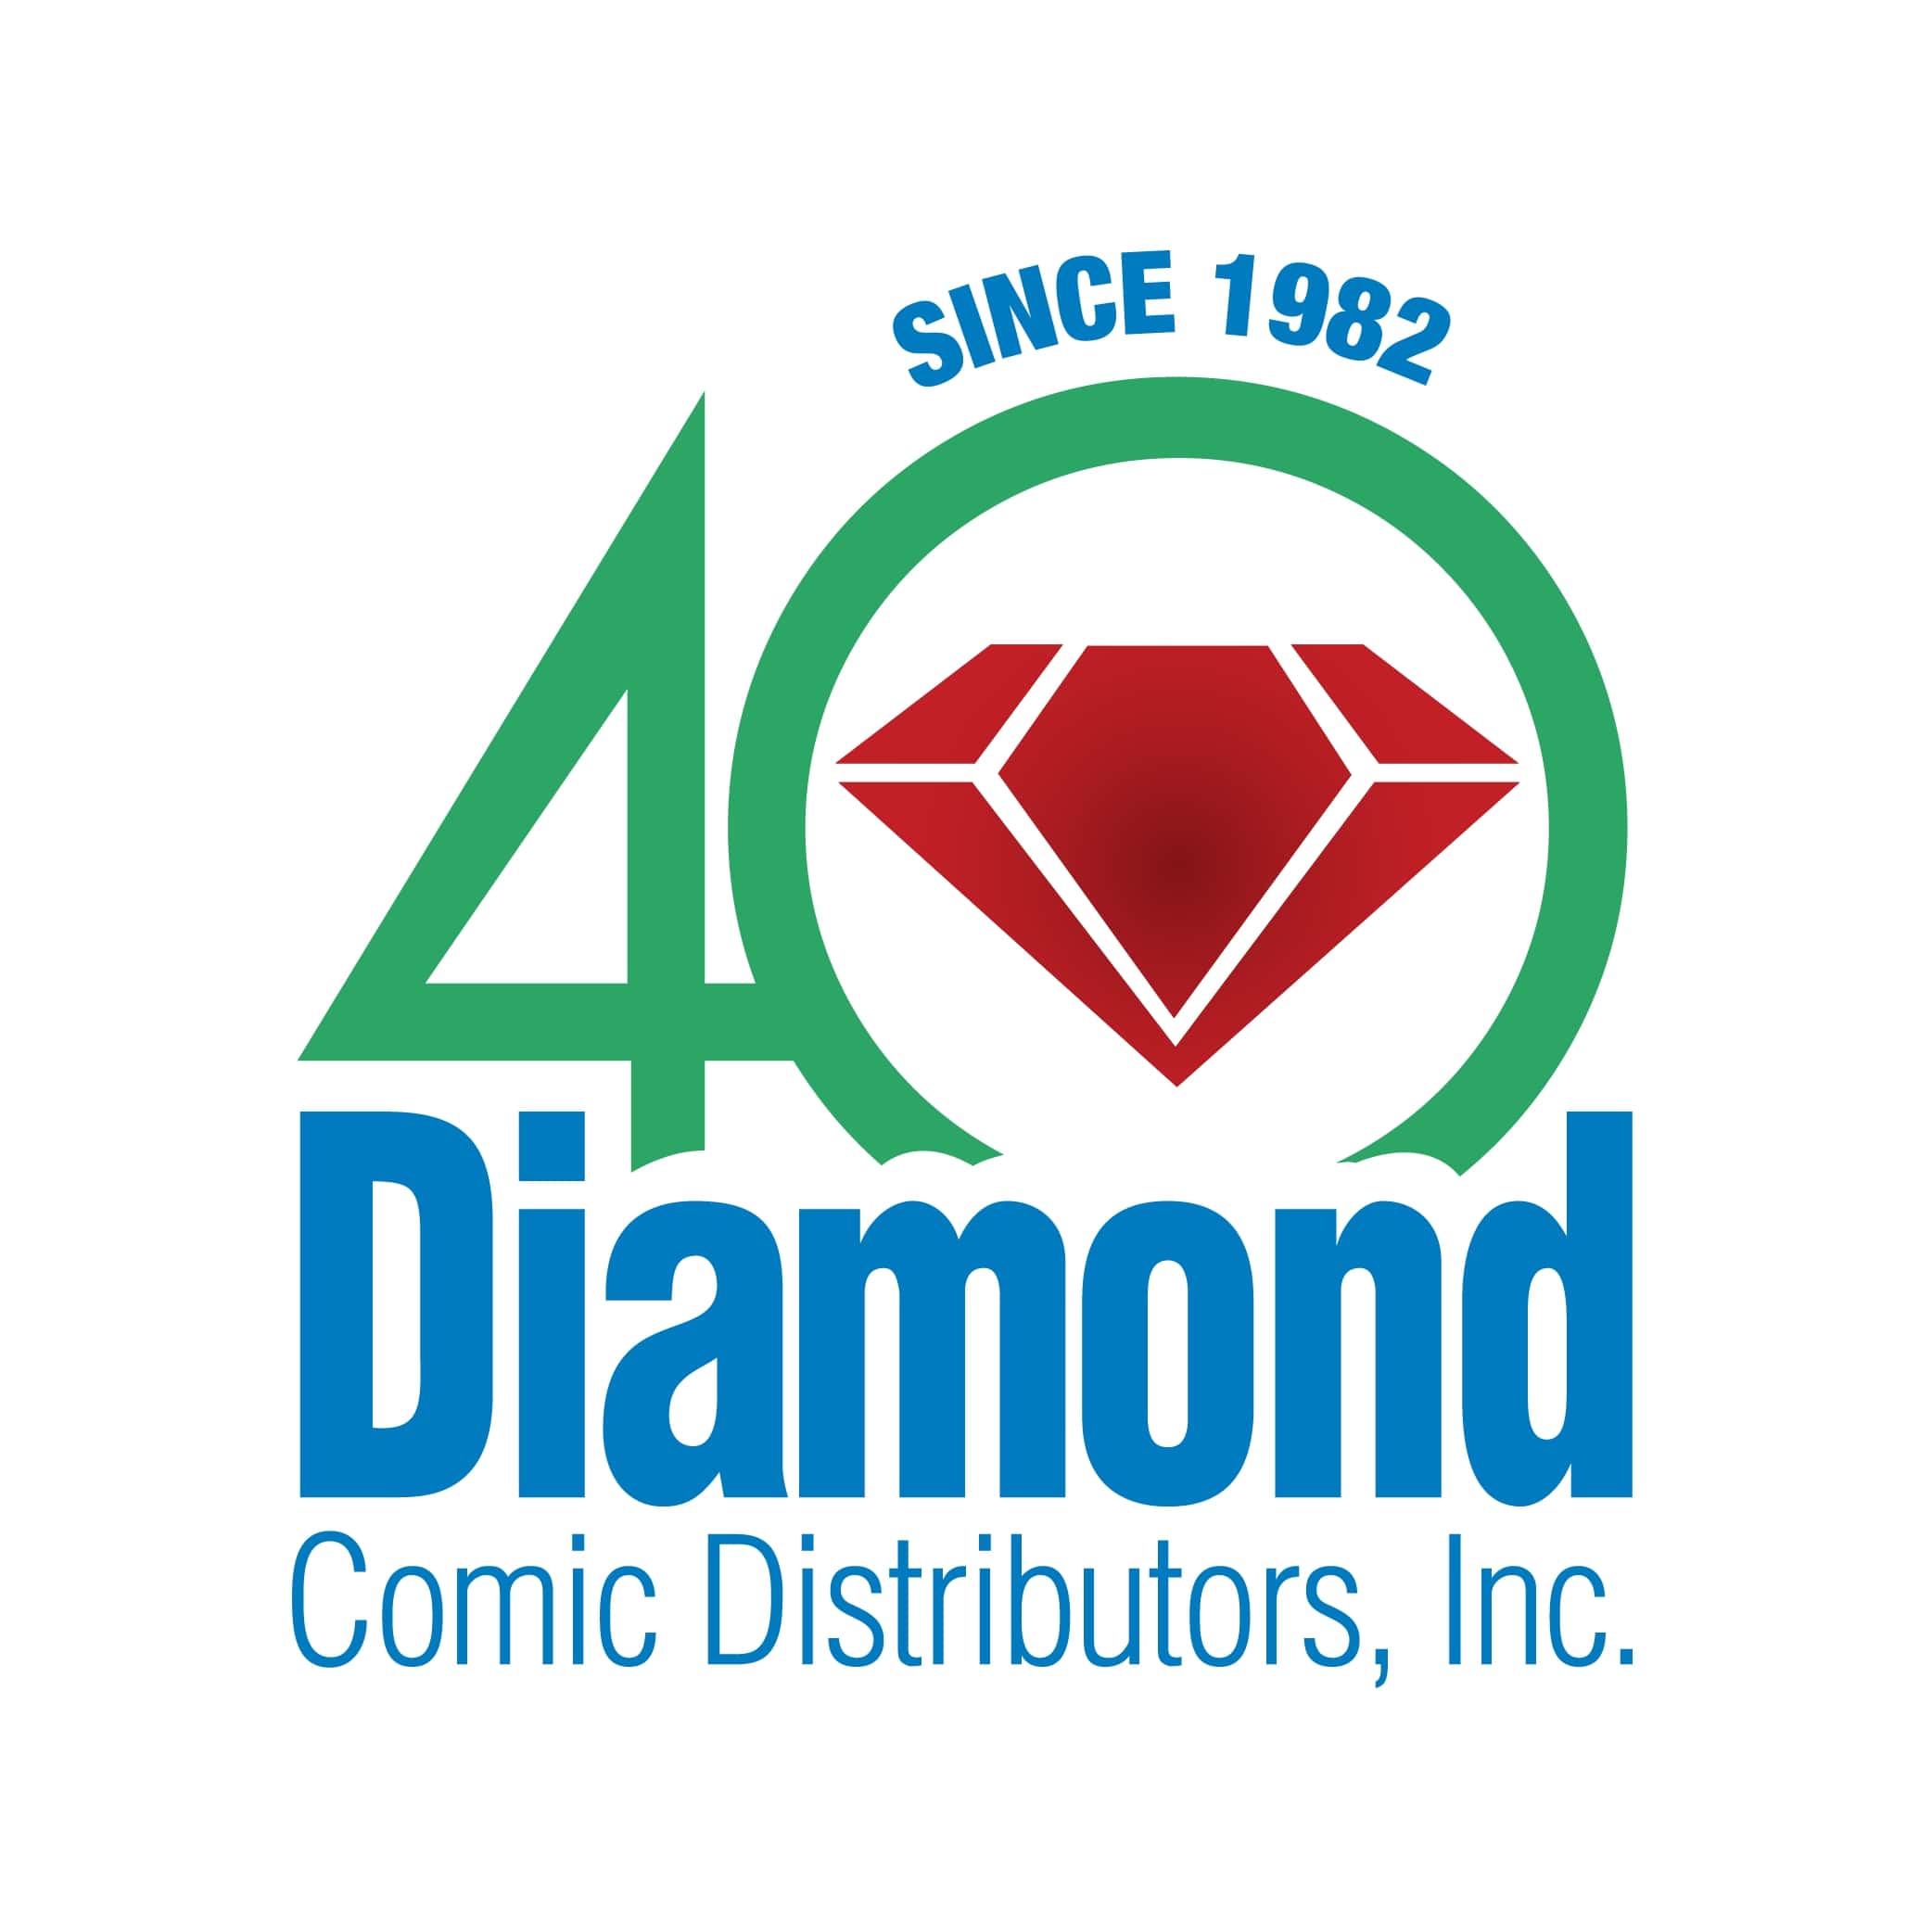 Diamond 40th anniversary logo 